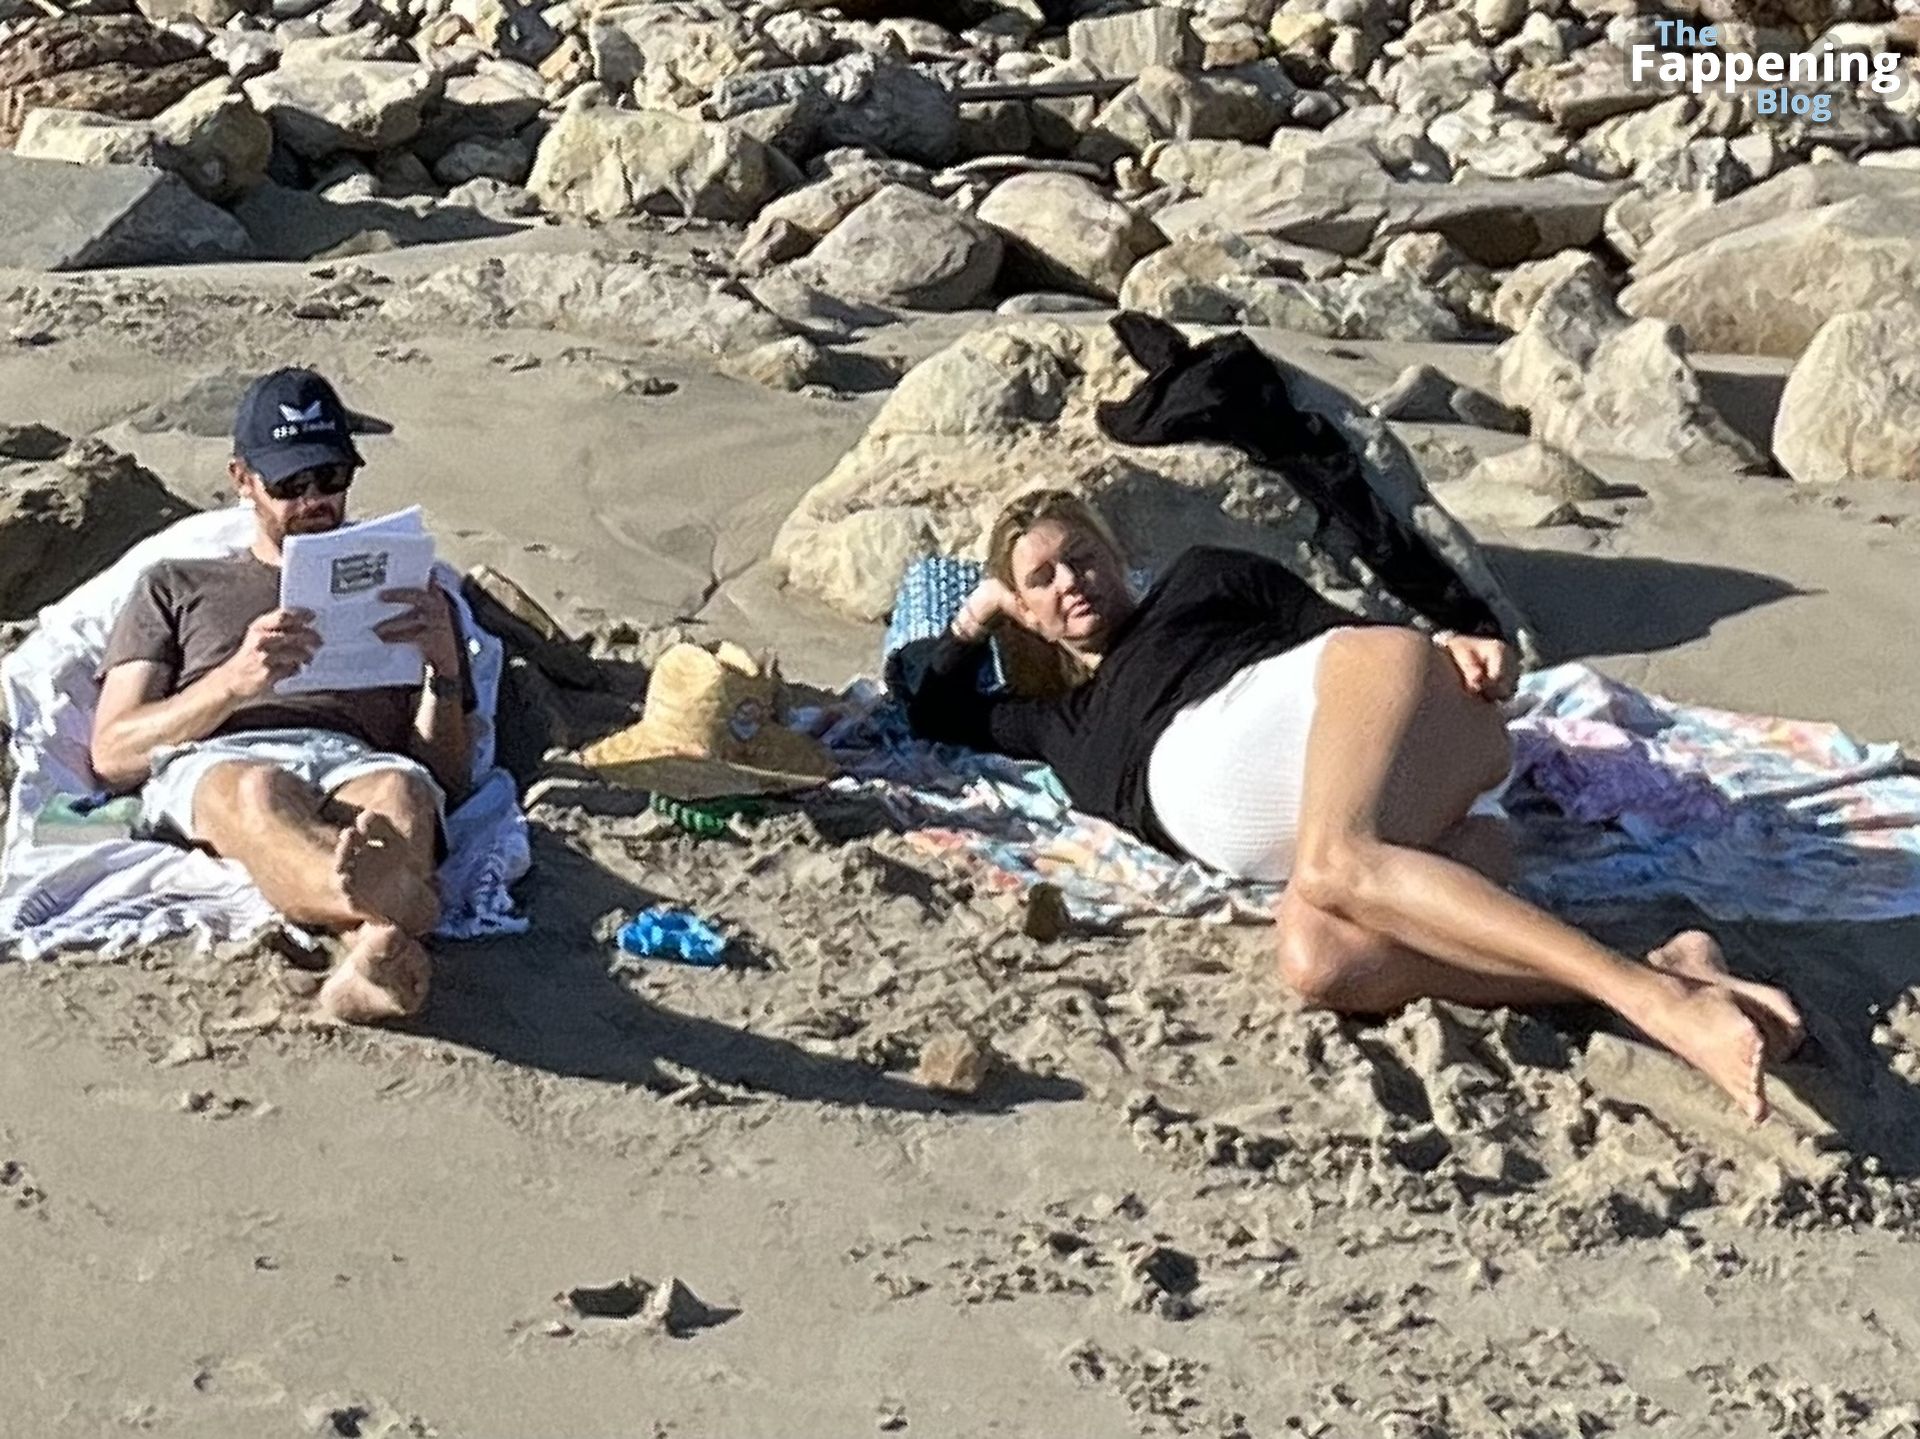 Kelly Rohrbach Shows Off Her Pregnancy Bump As She Hits The Beach in Malibu (17 Photos)